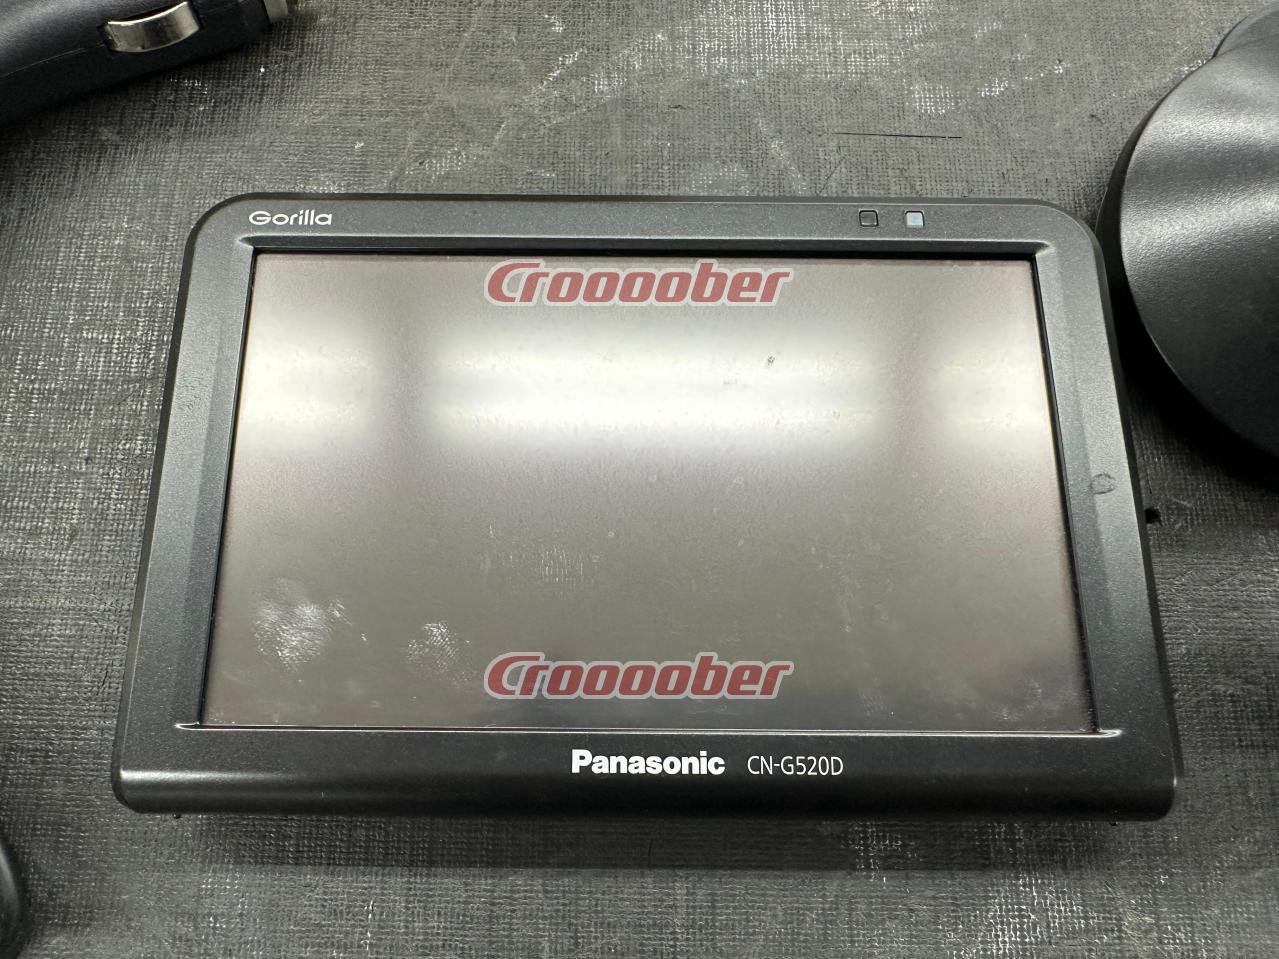 Panasonic Portable Car Navigation System Gorilla CN-5 Inches Seg